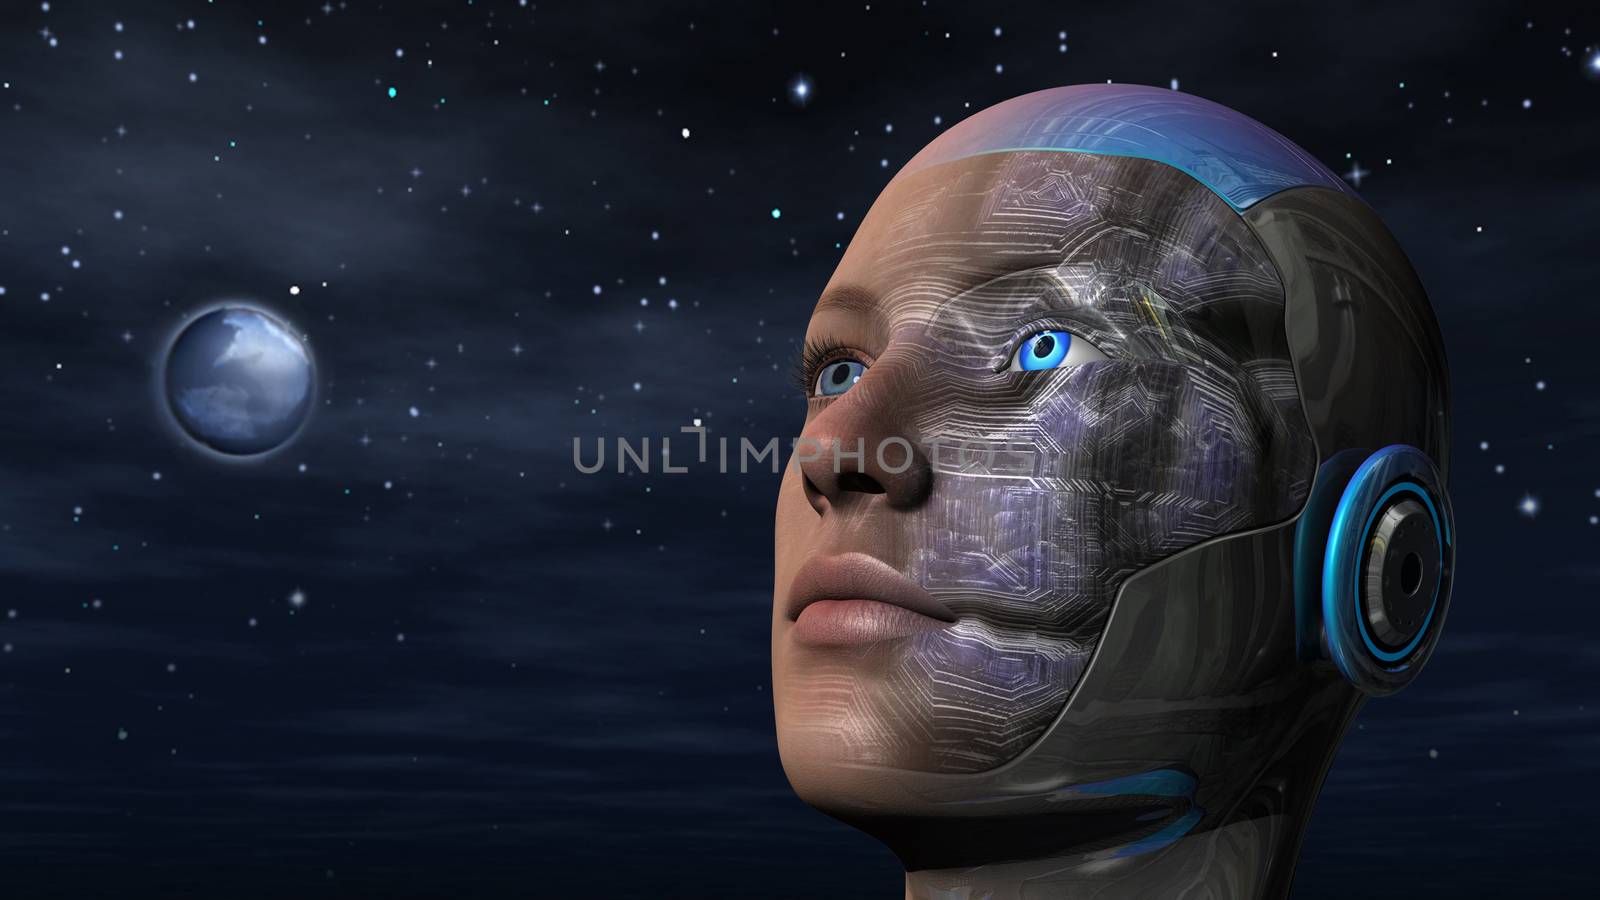 Cyborg woman with night sky background